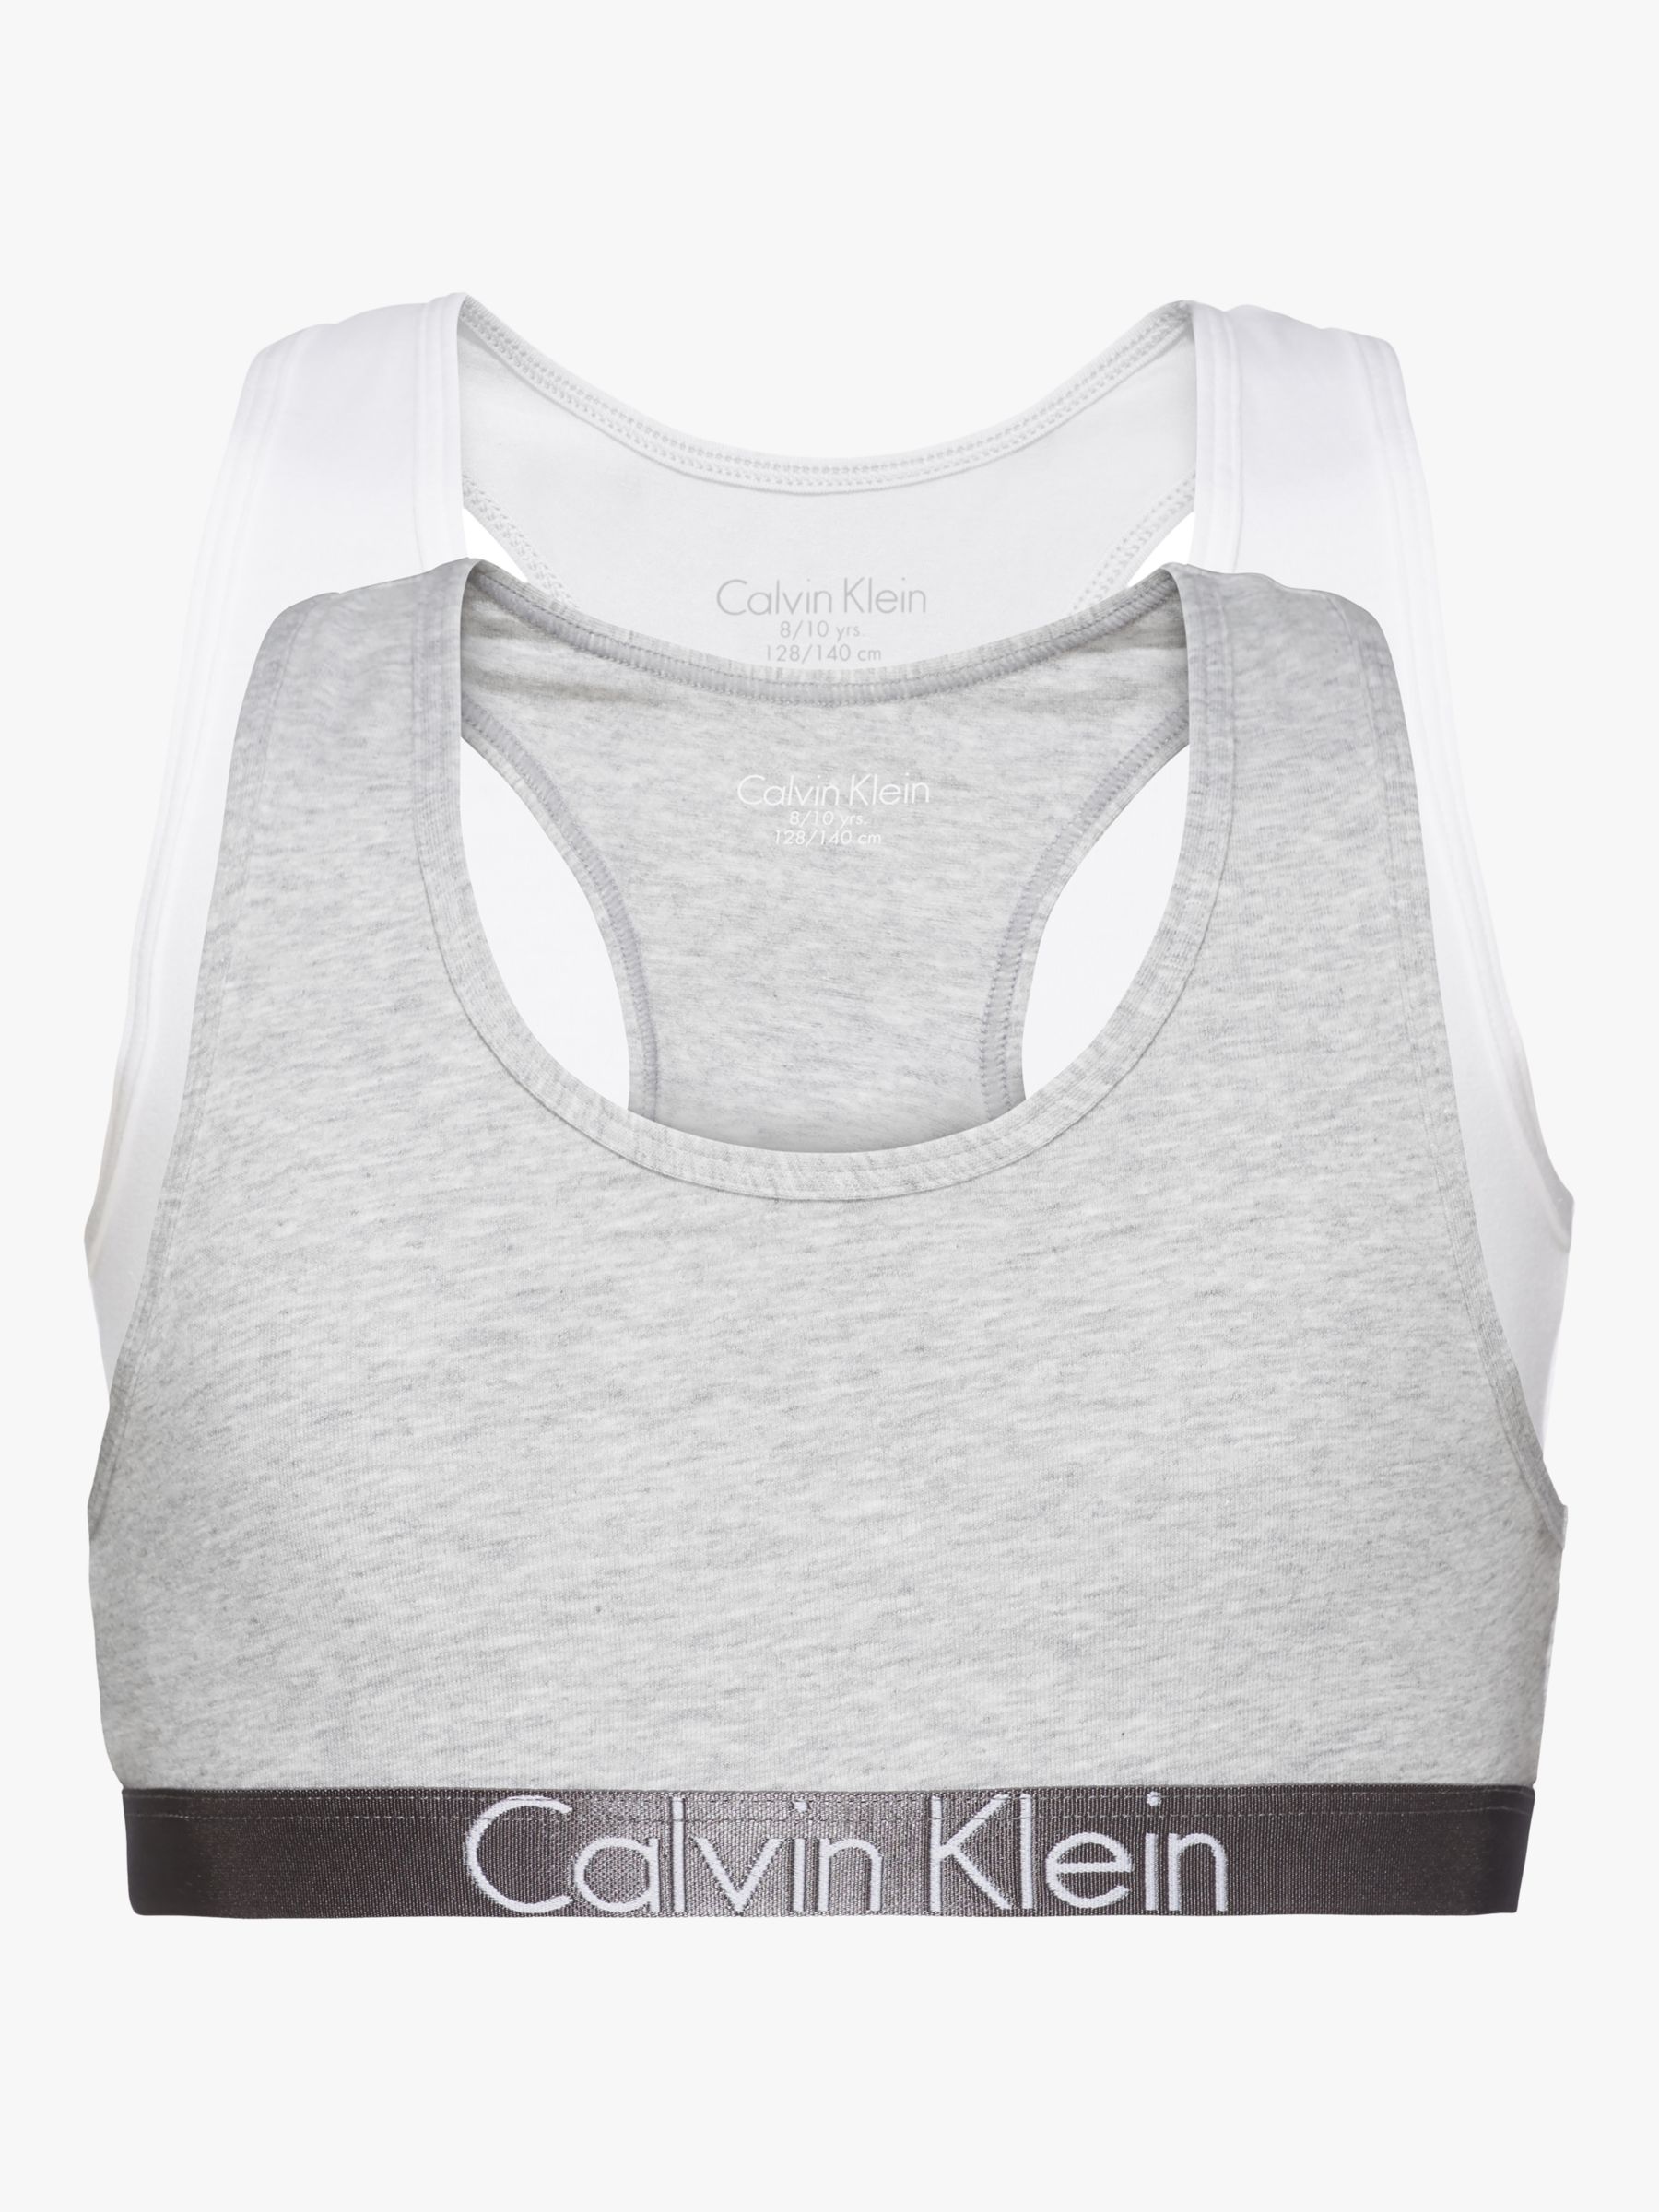 Calvin Klein Kids' Bralette, Pack of 2, Grey/White, 8-10 years